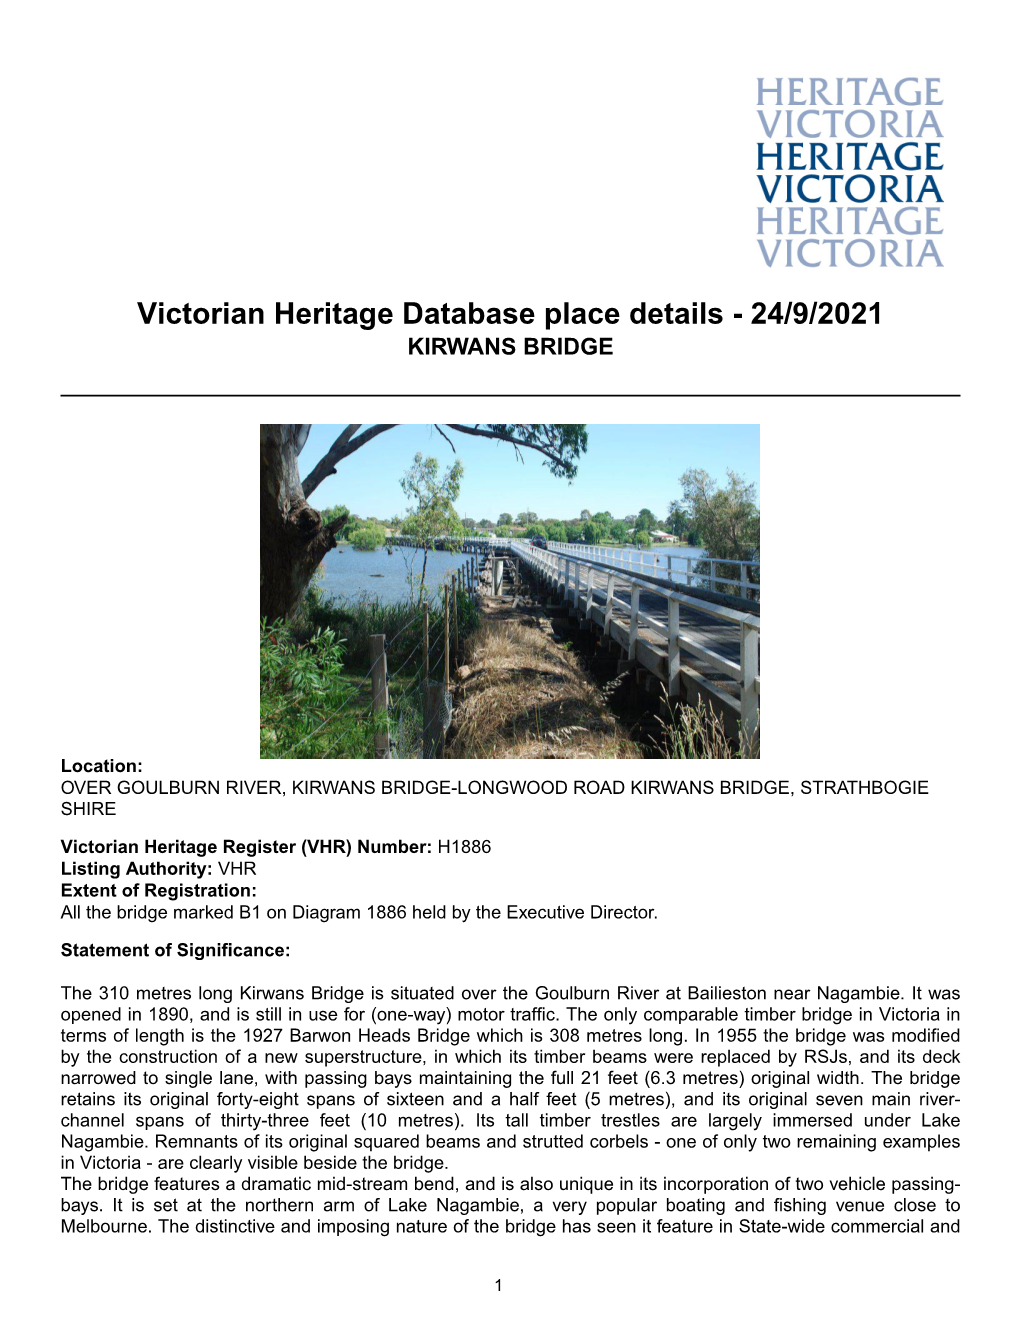 Victorian Heritage Database Place Details - 24/9/2021 KIRWANS BRIDGE